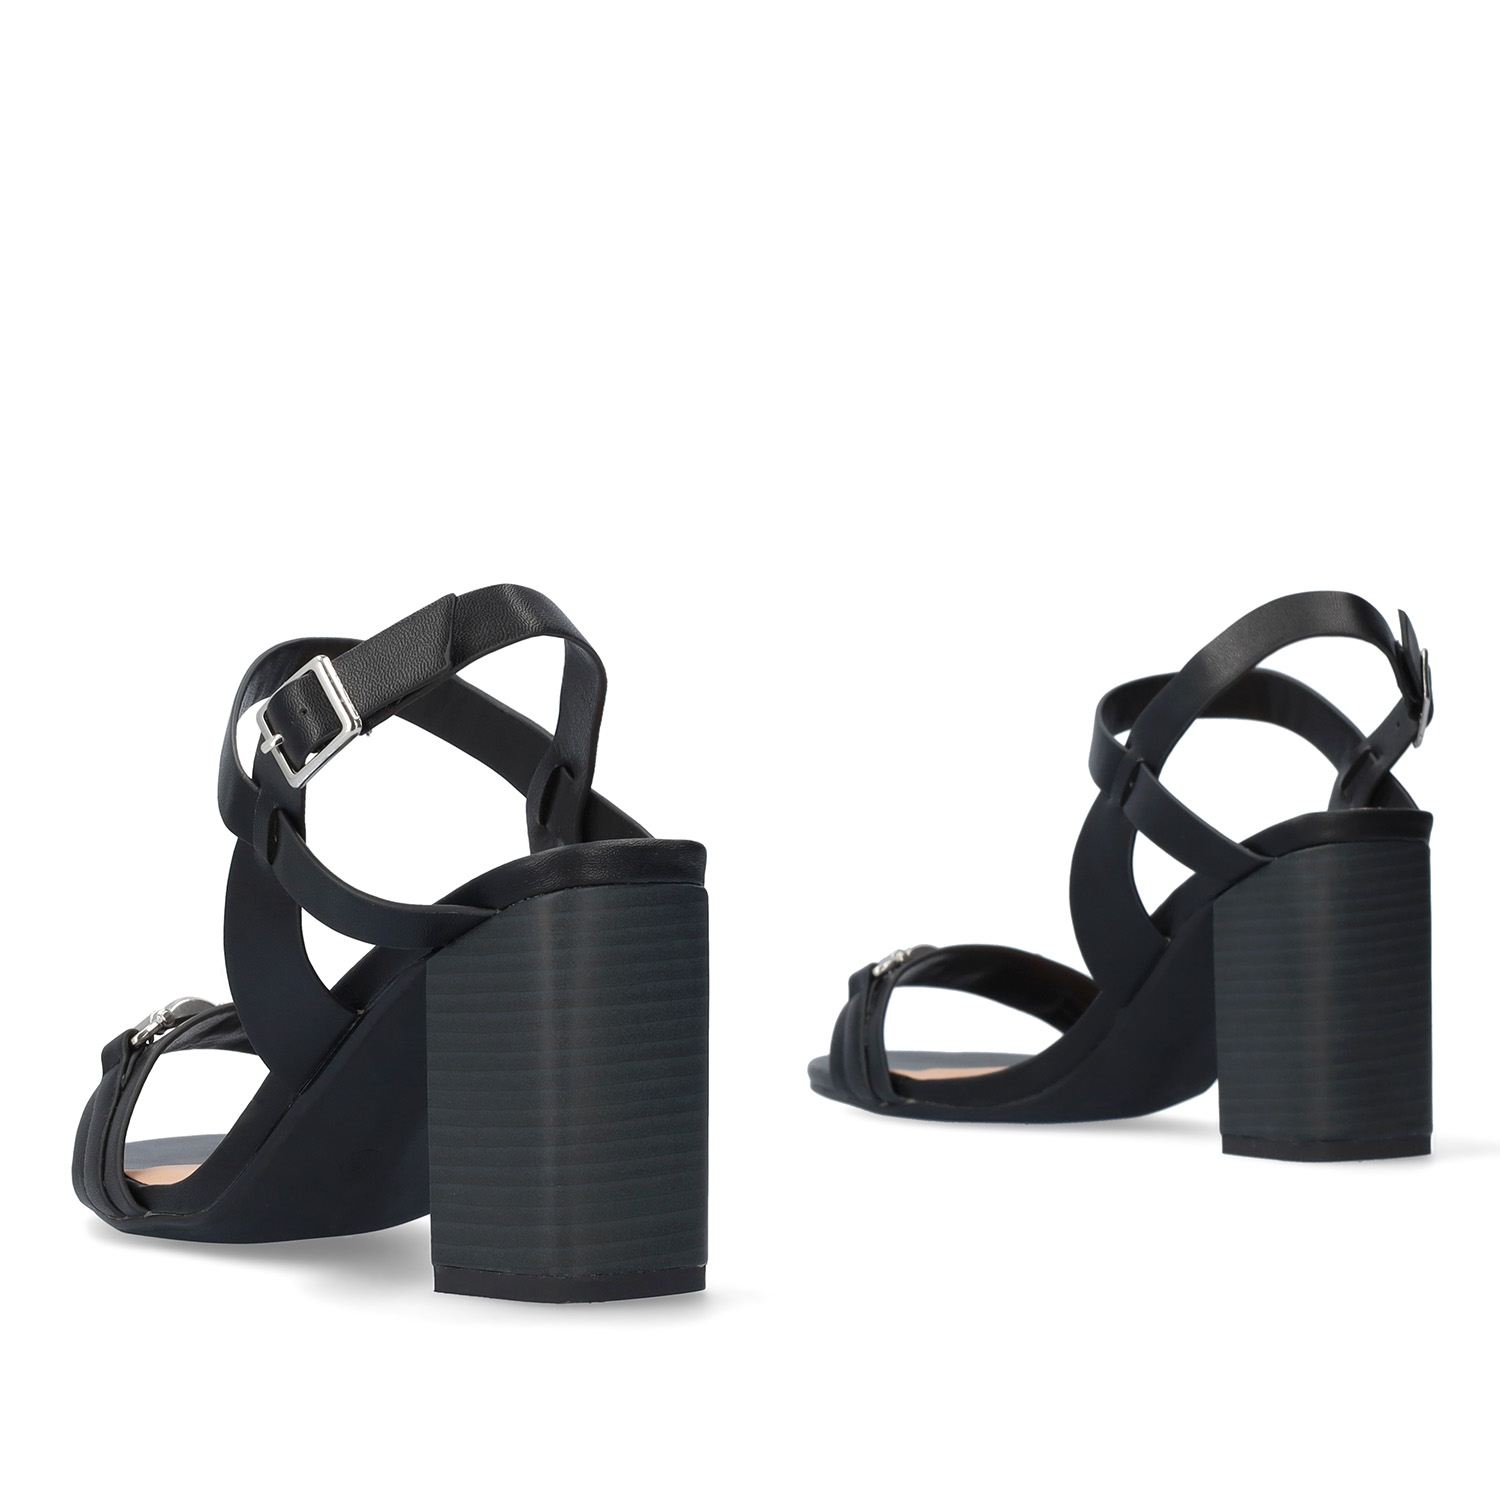 Squared heel sandal in soft black 